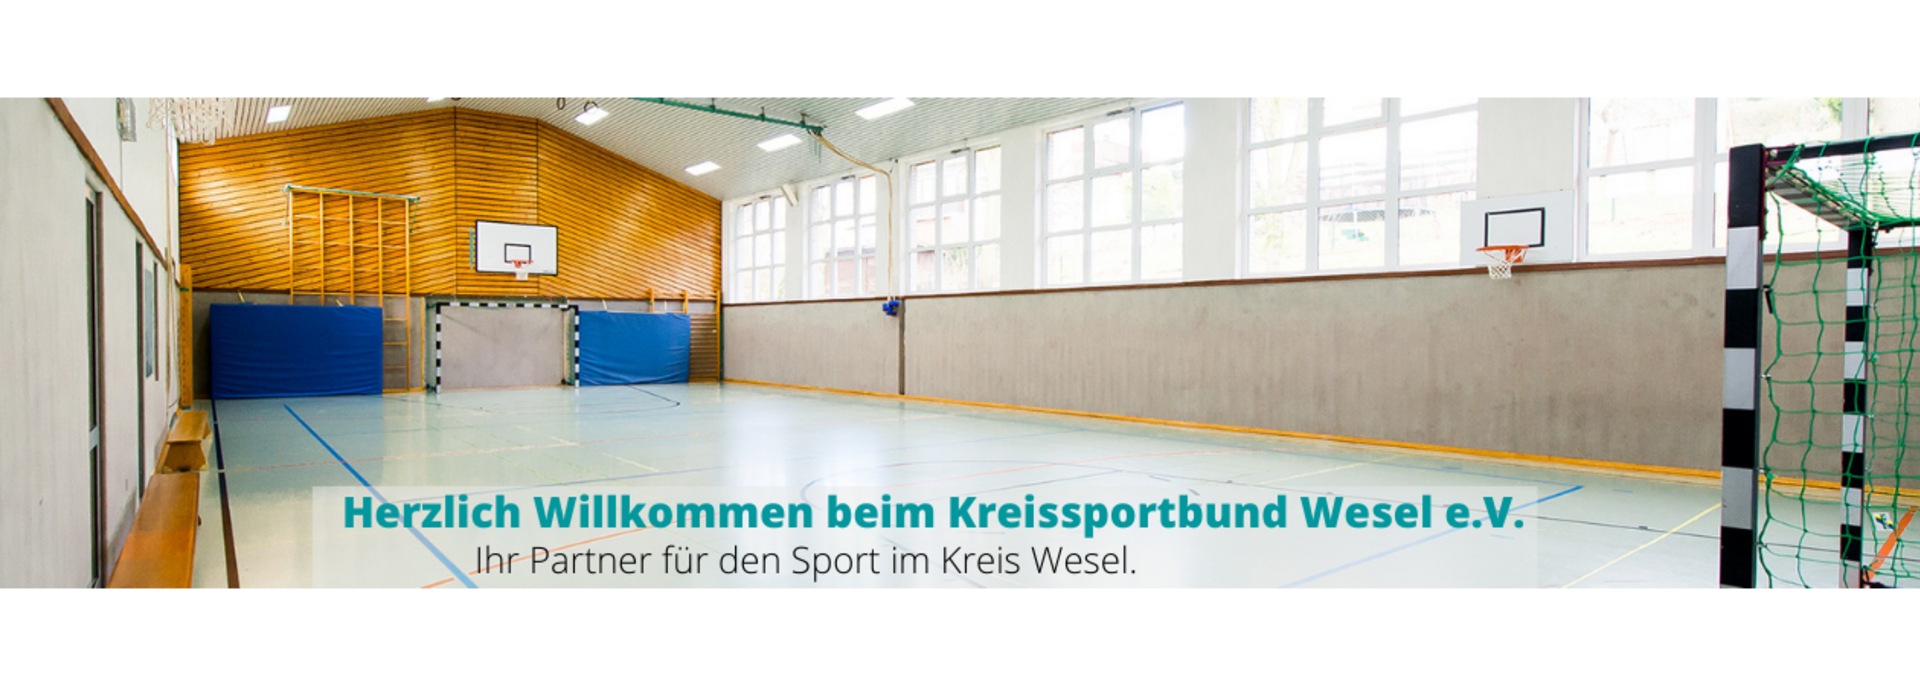 Kreissportbund Wesel e.V.